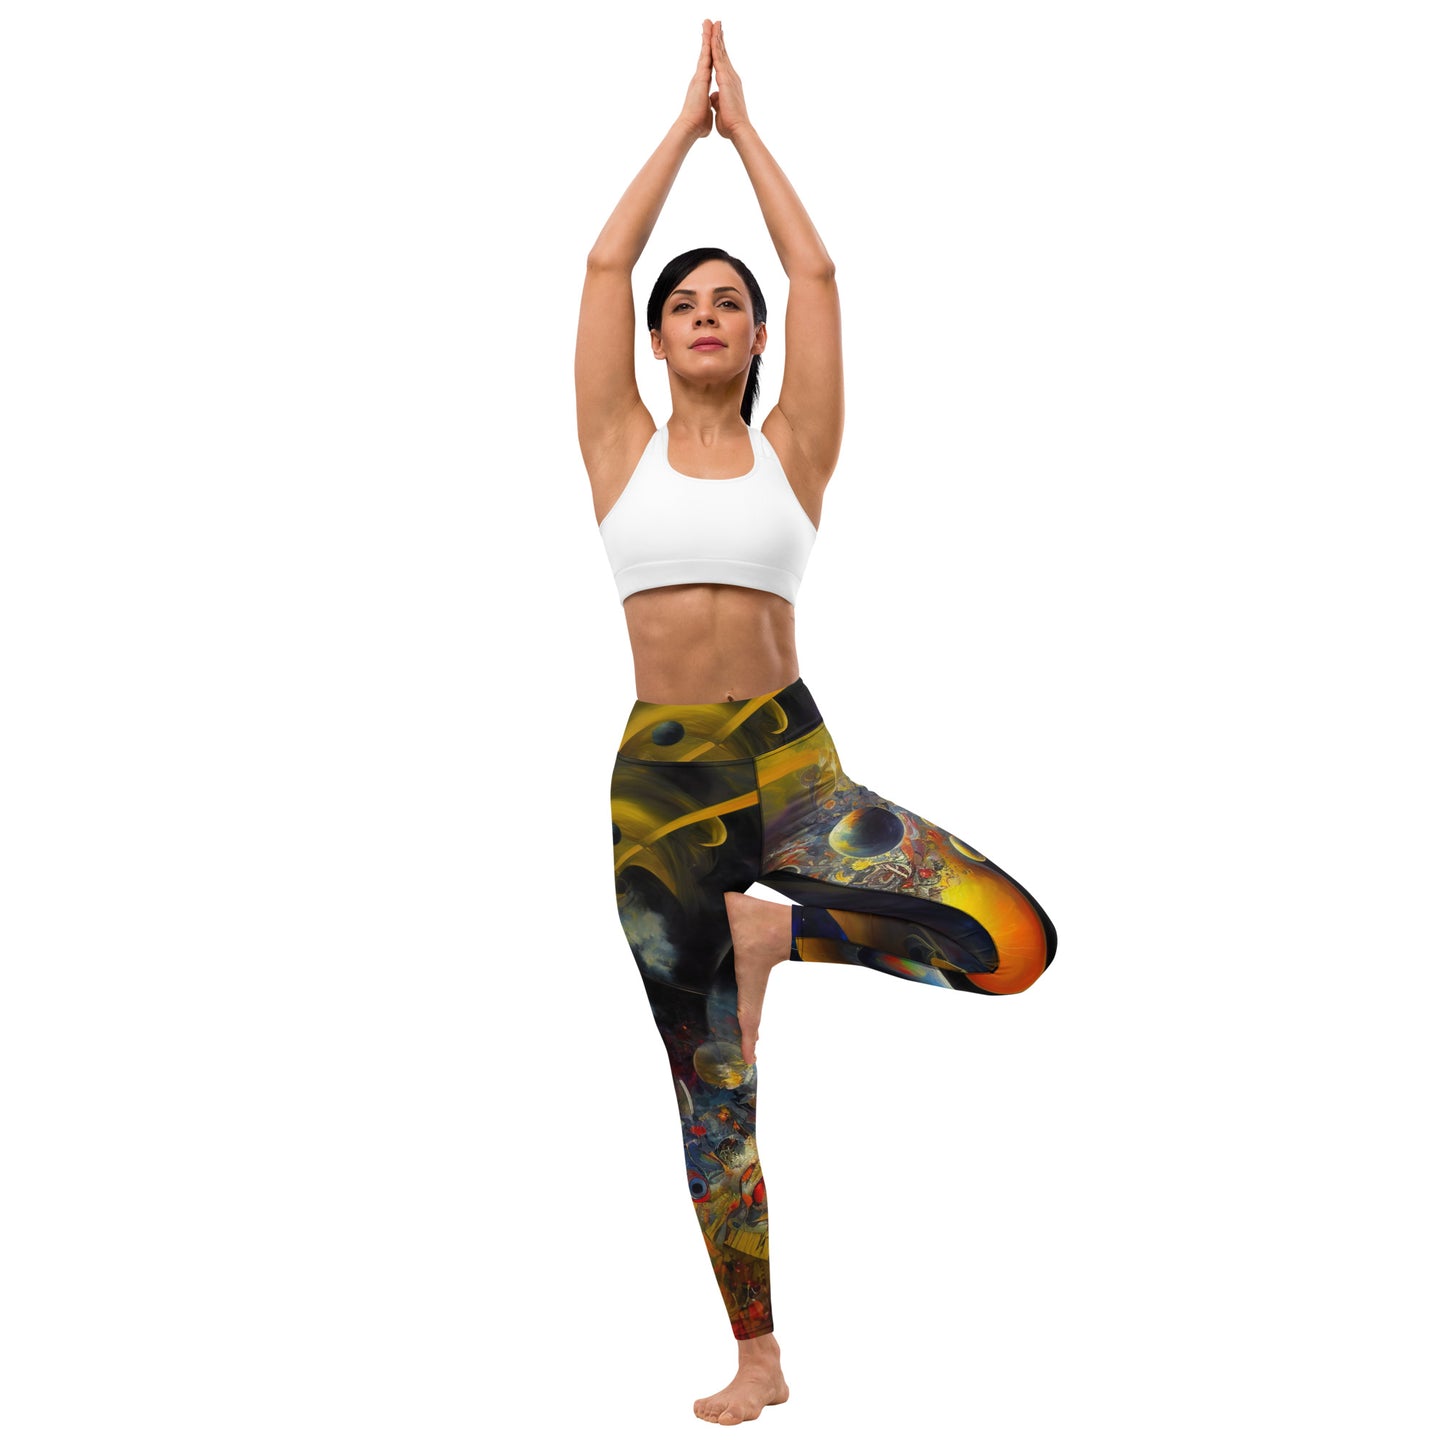 Yoga leggings: Interstellar